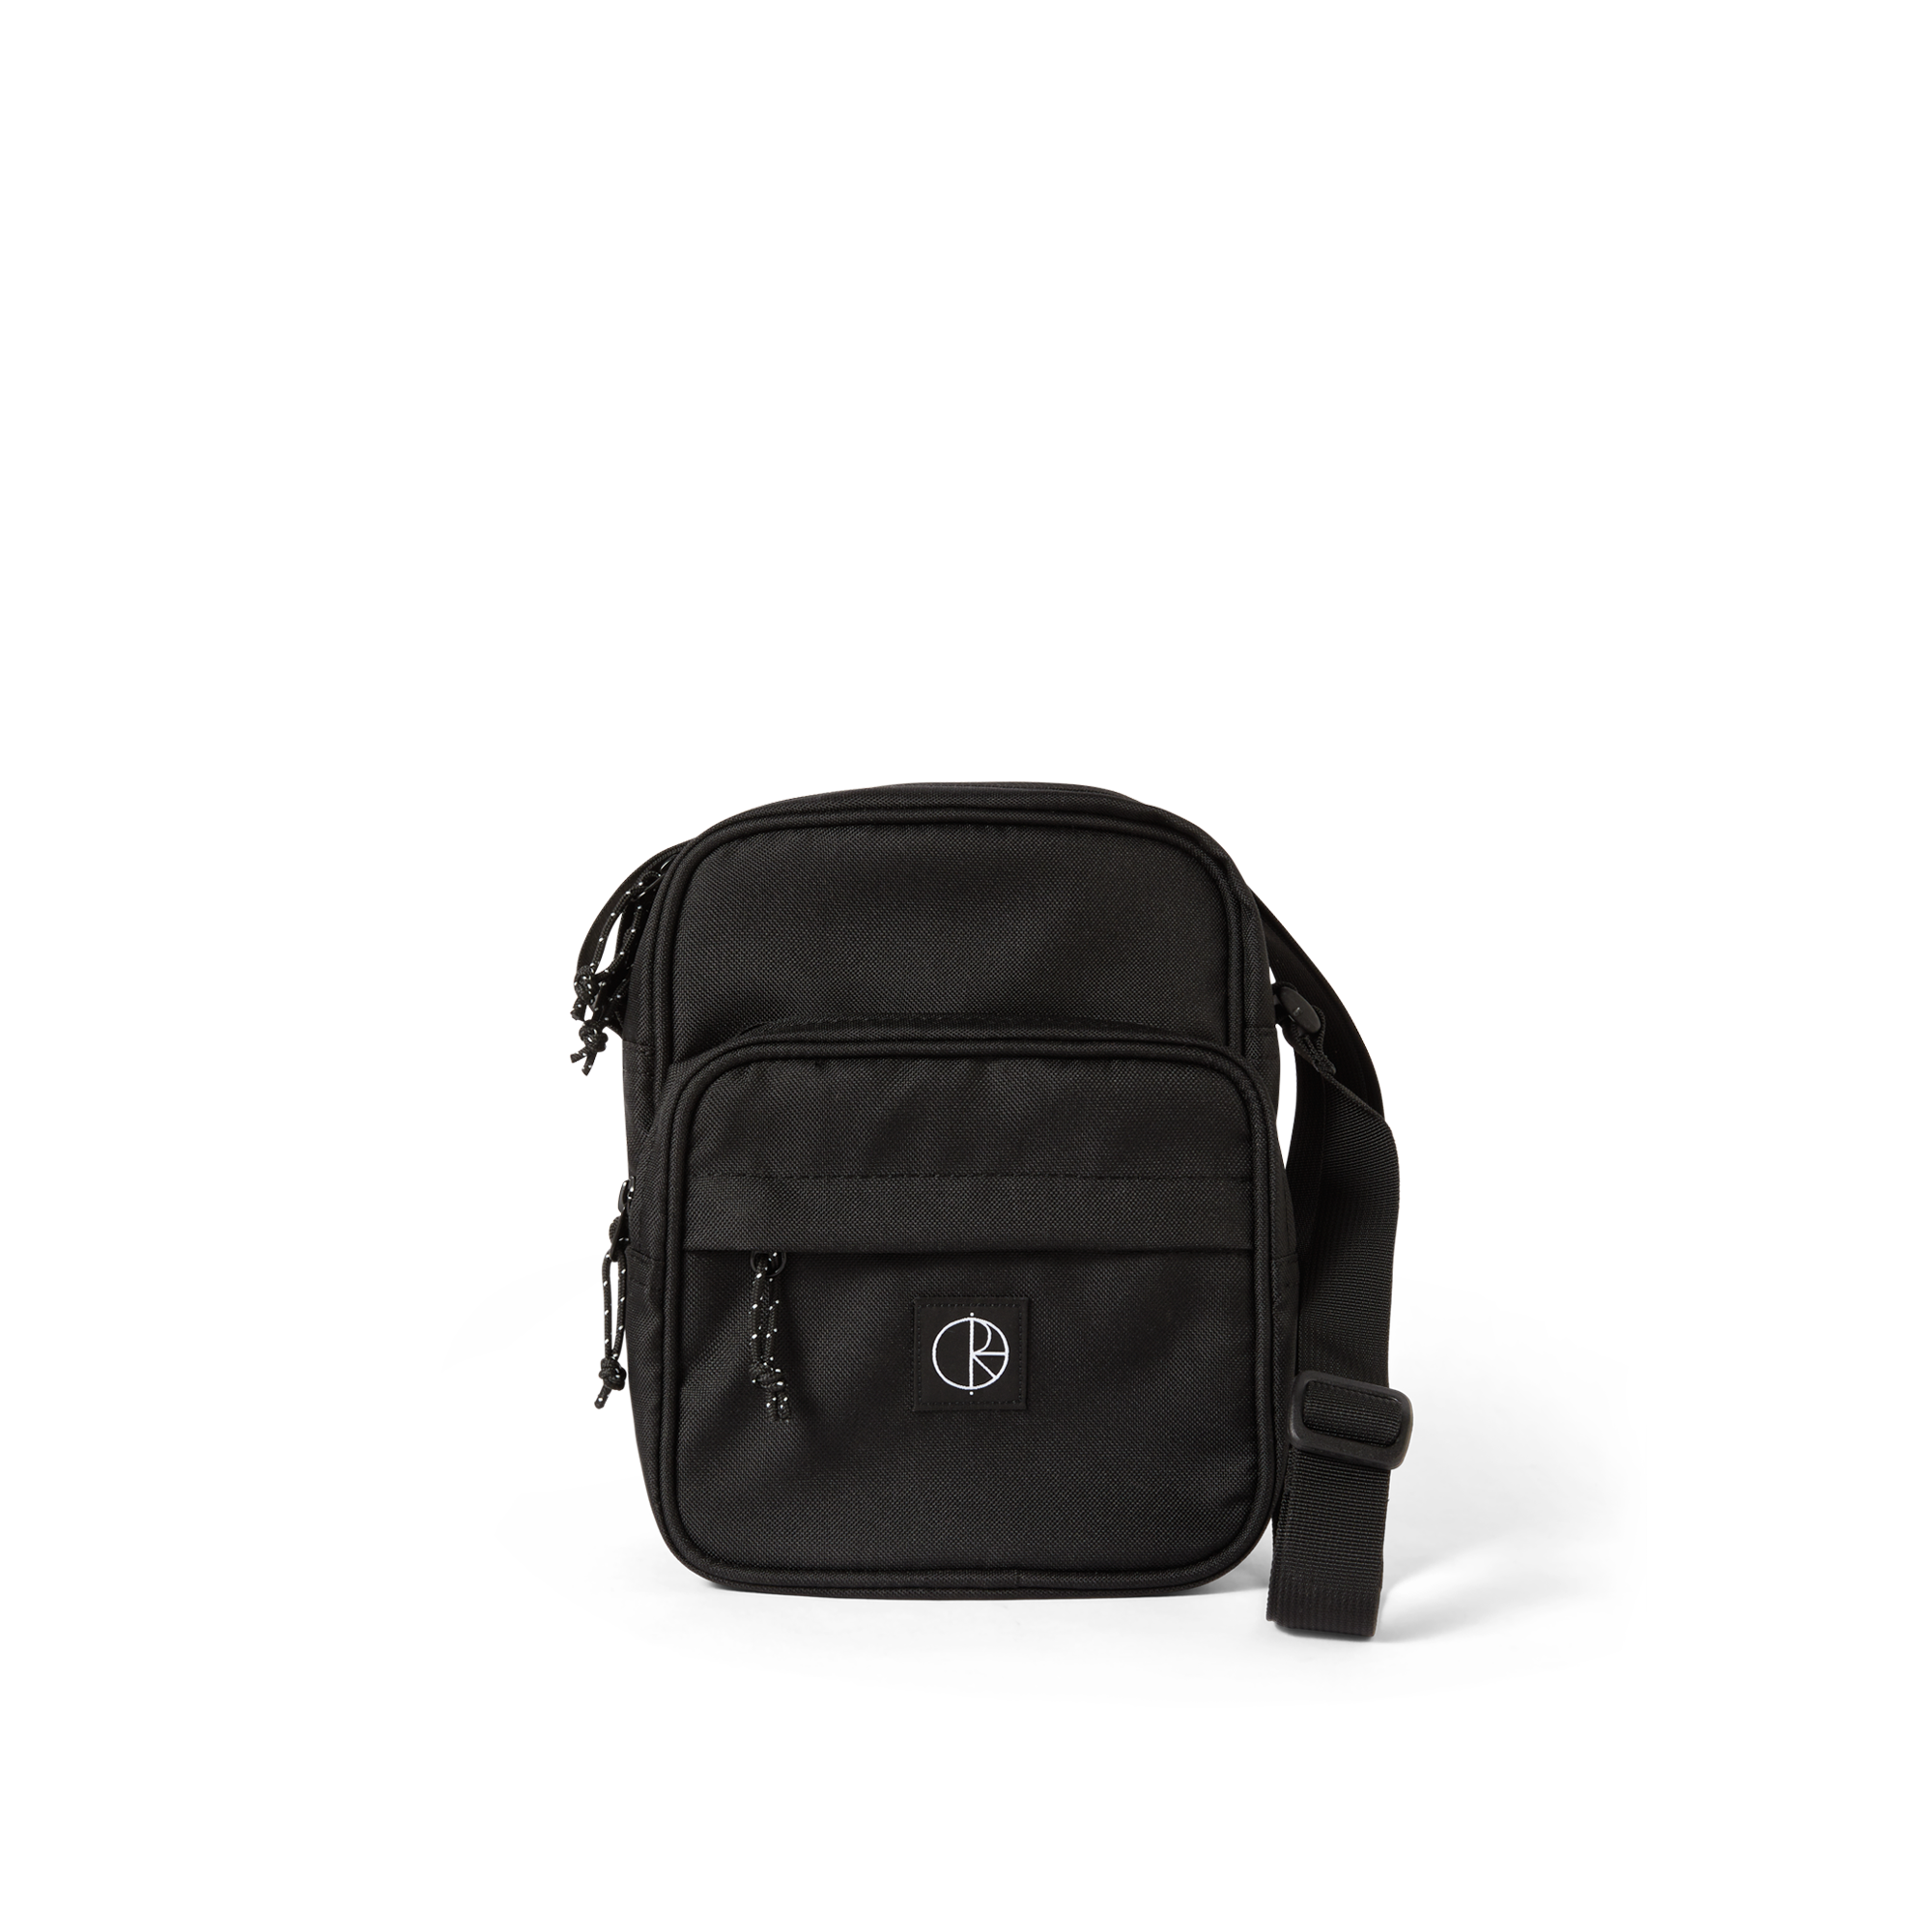 Polar Skate Co Pocket Dealer Bag- (Black)